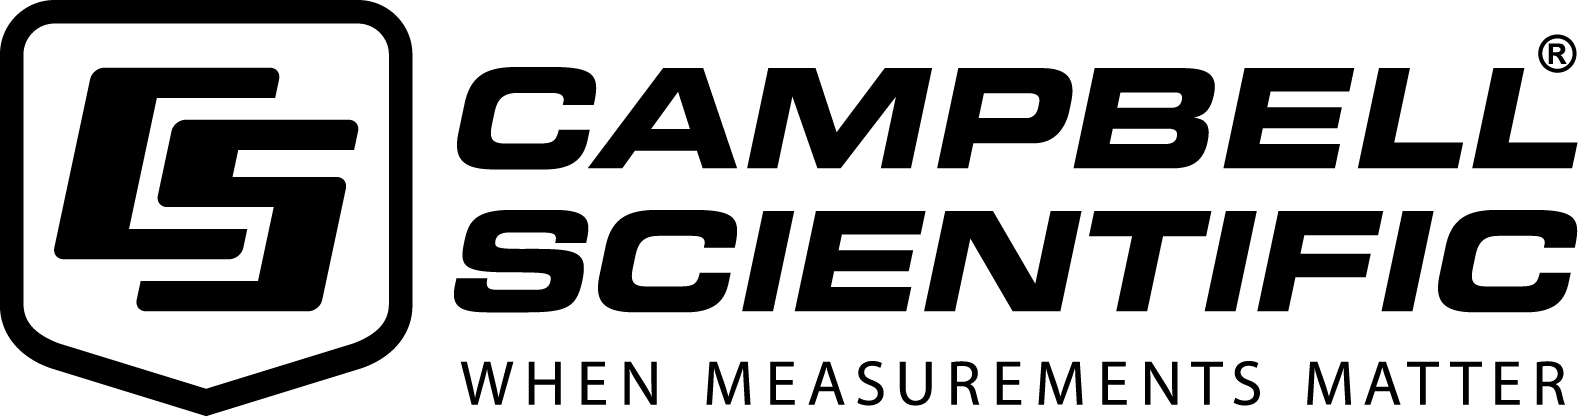 campbell scientific logo